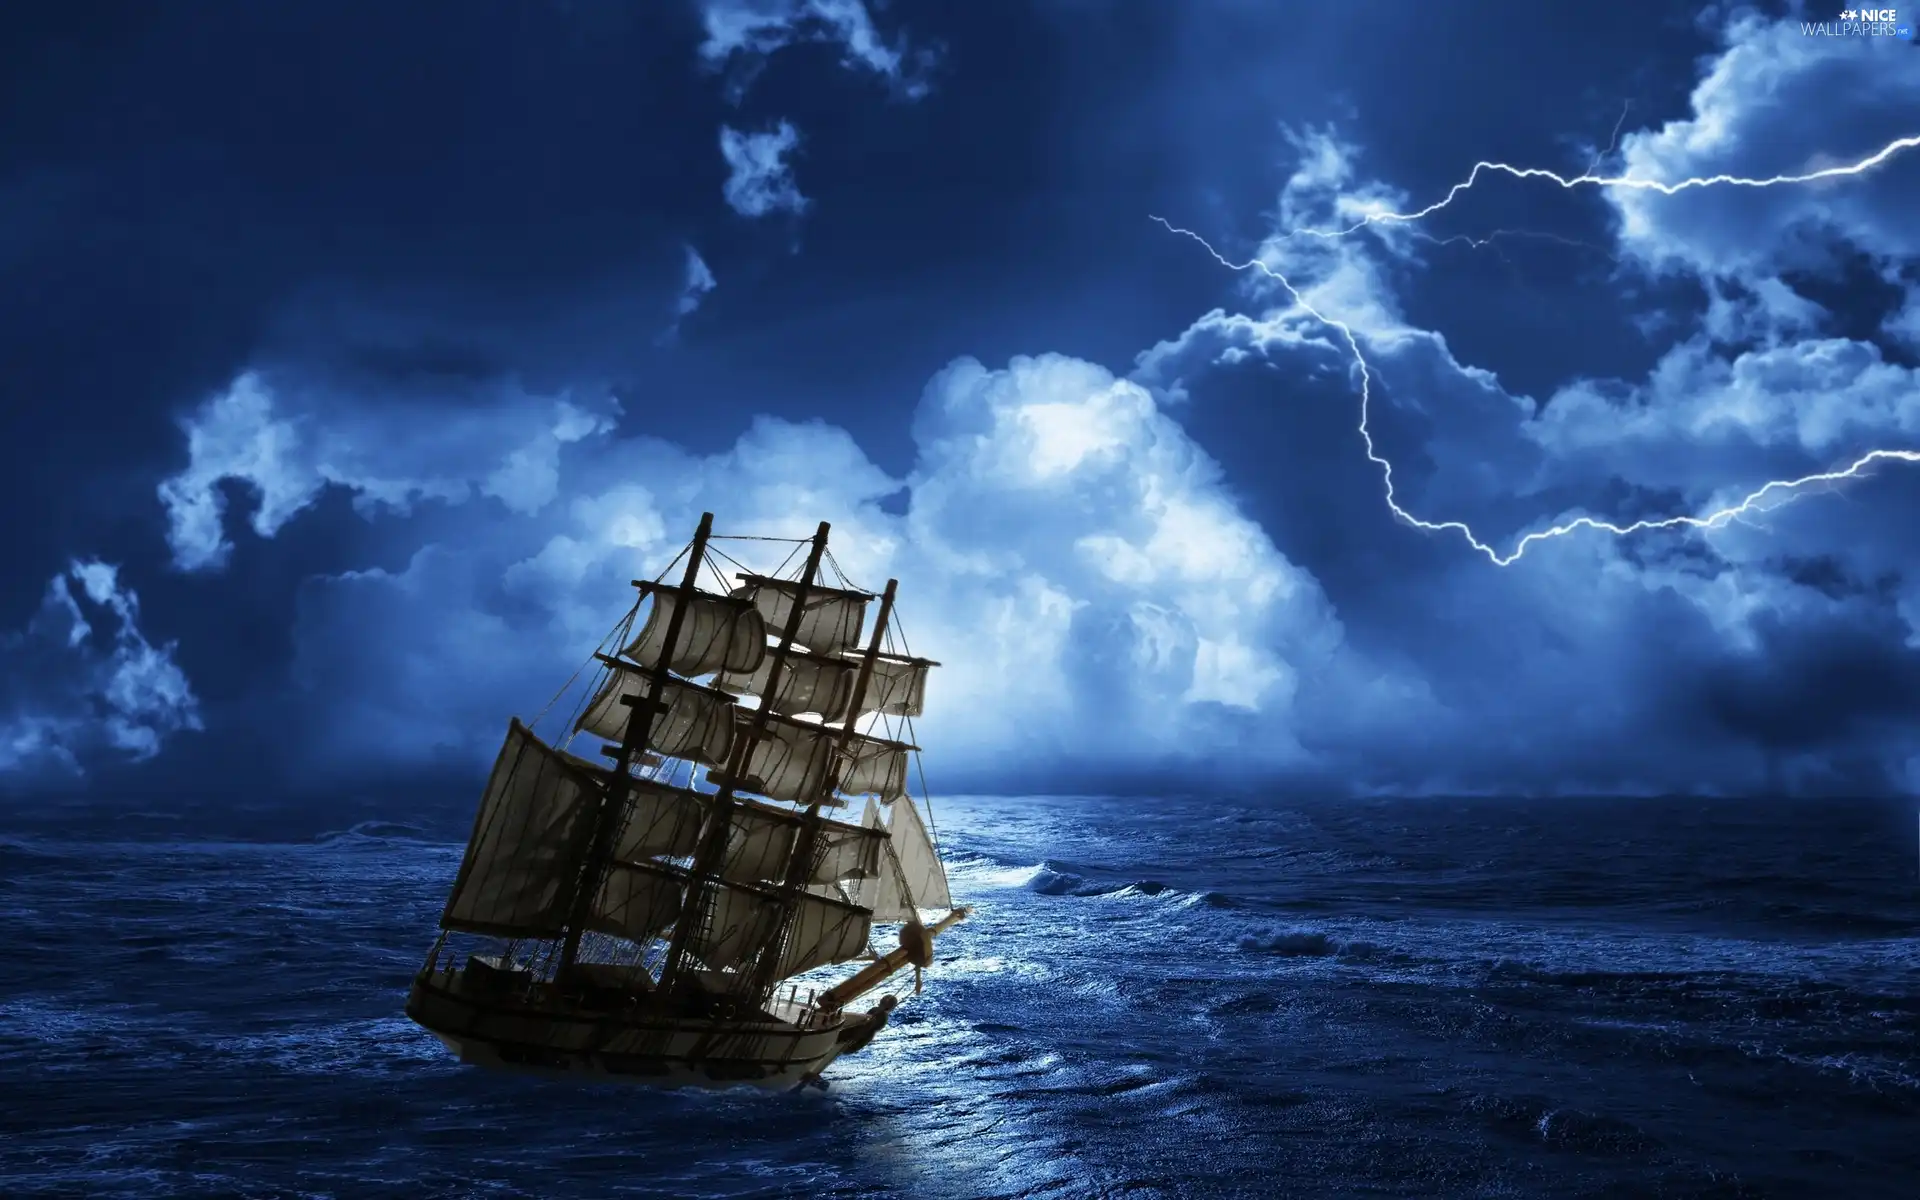 Storm, sea, sailing vessel, clouds